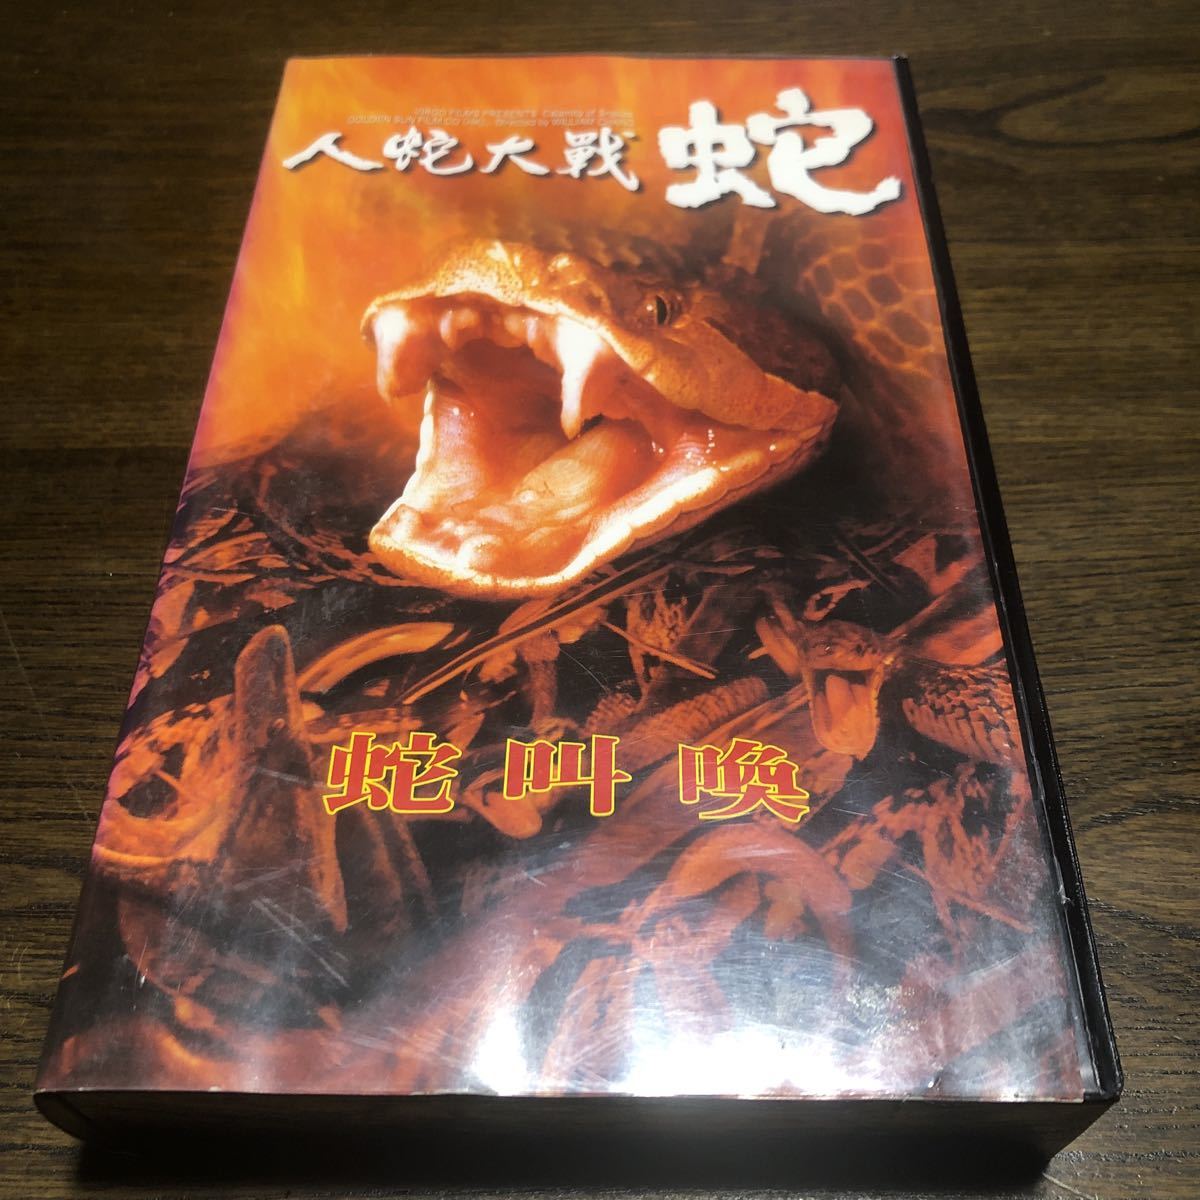 VHS 人蛇大戦蛇字幕スーパー1982年香港台湾映画ウィルアム・チャング 